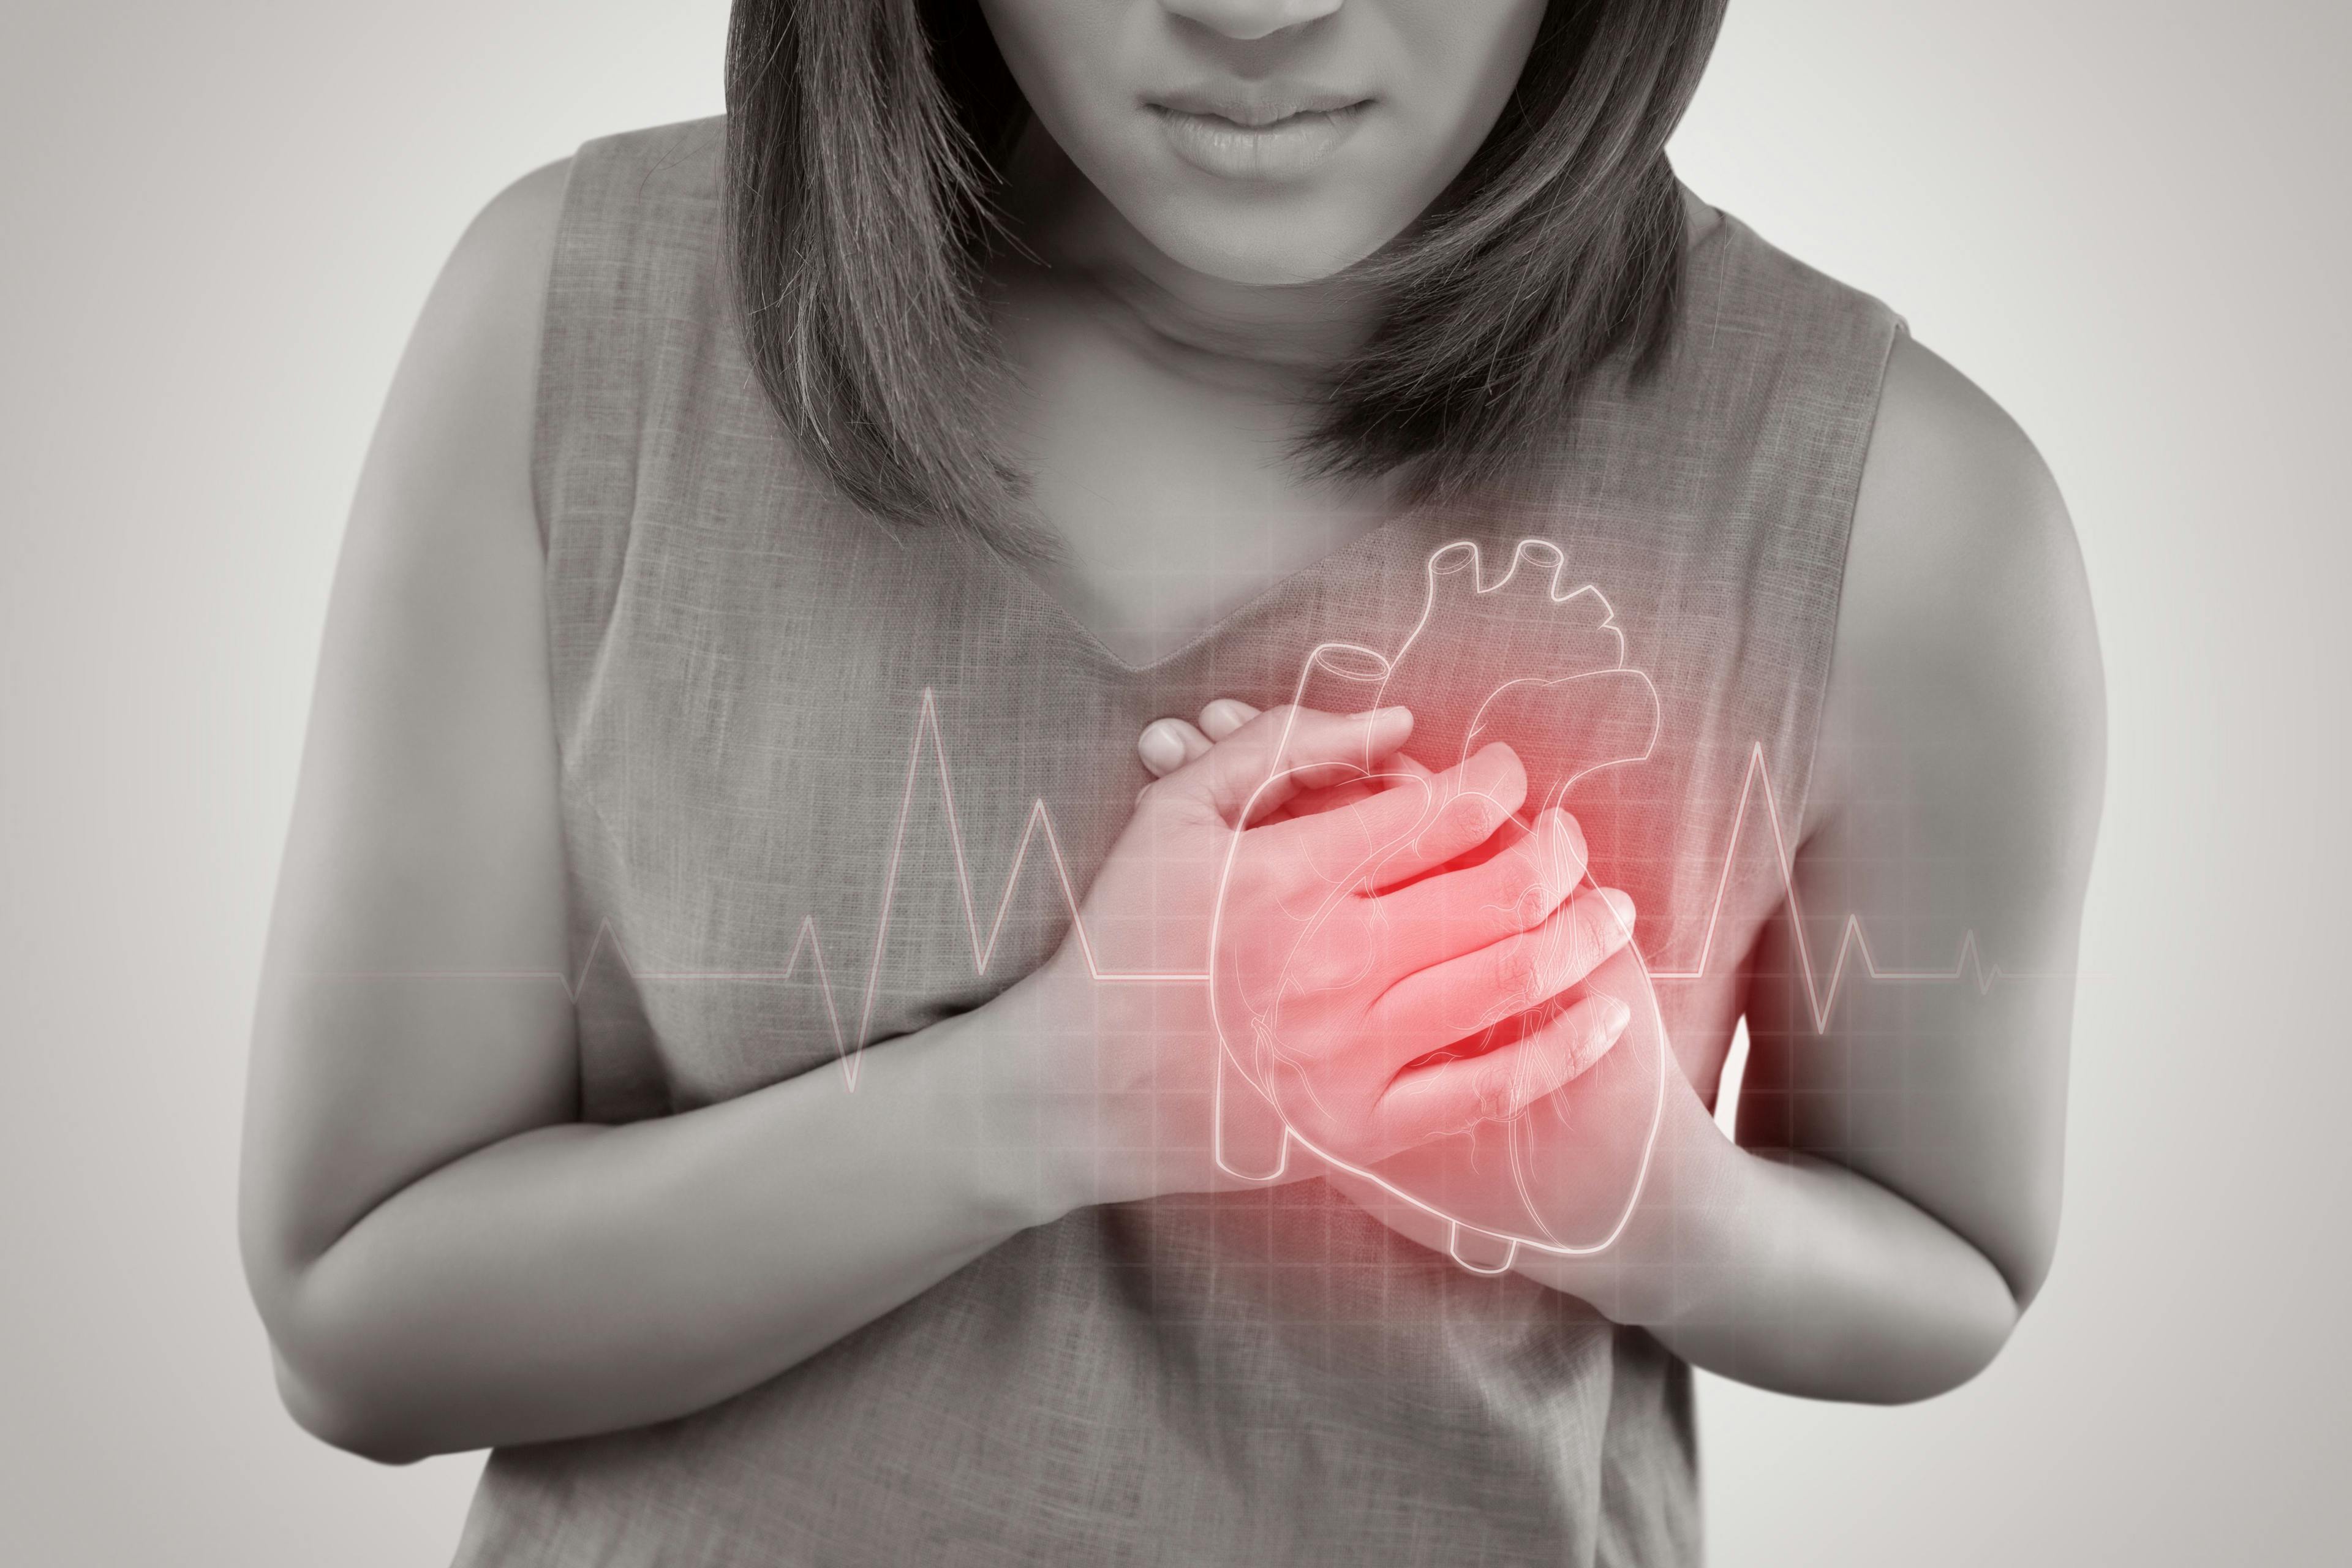 Childhood adversity increases risk of cardiovascular disease